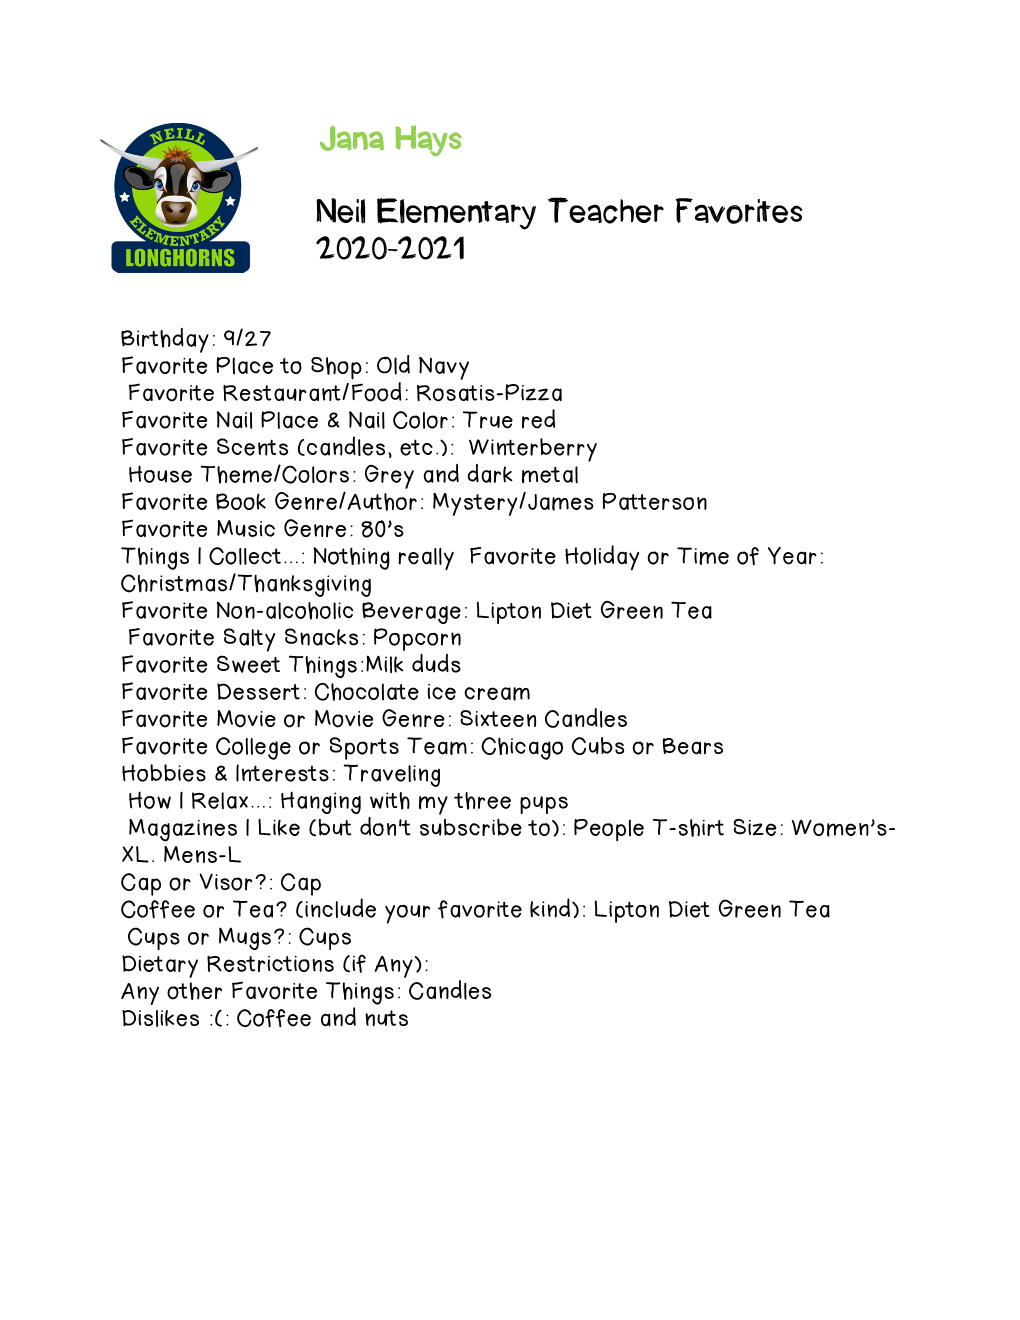 Jana Hays Neil Elementary Teacher Favorites 2020-2021